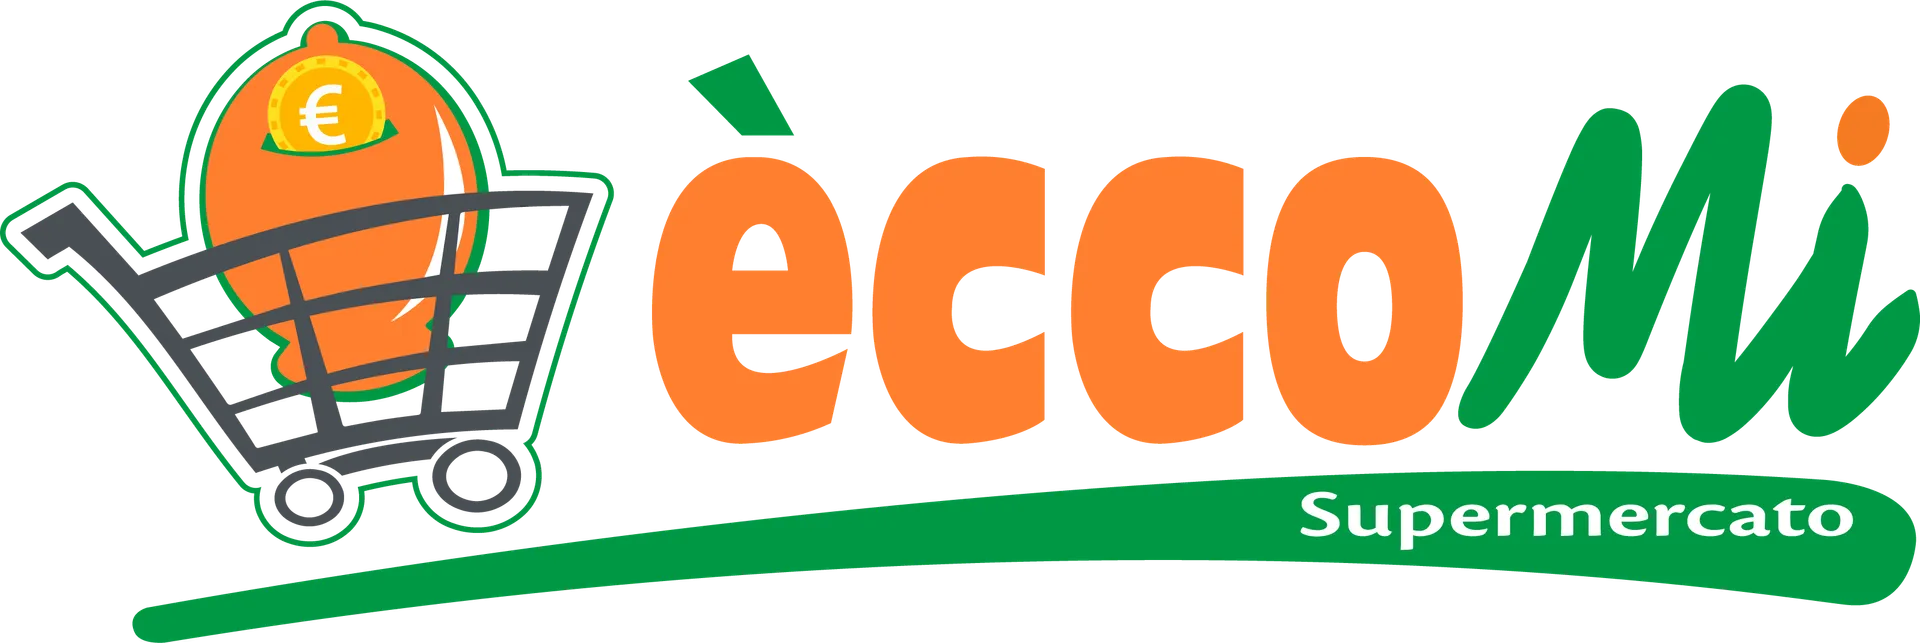 ÈCCOMI logo